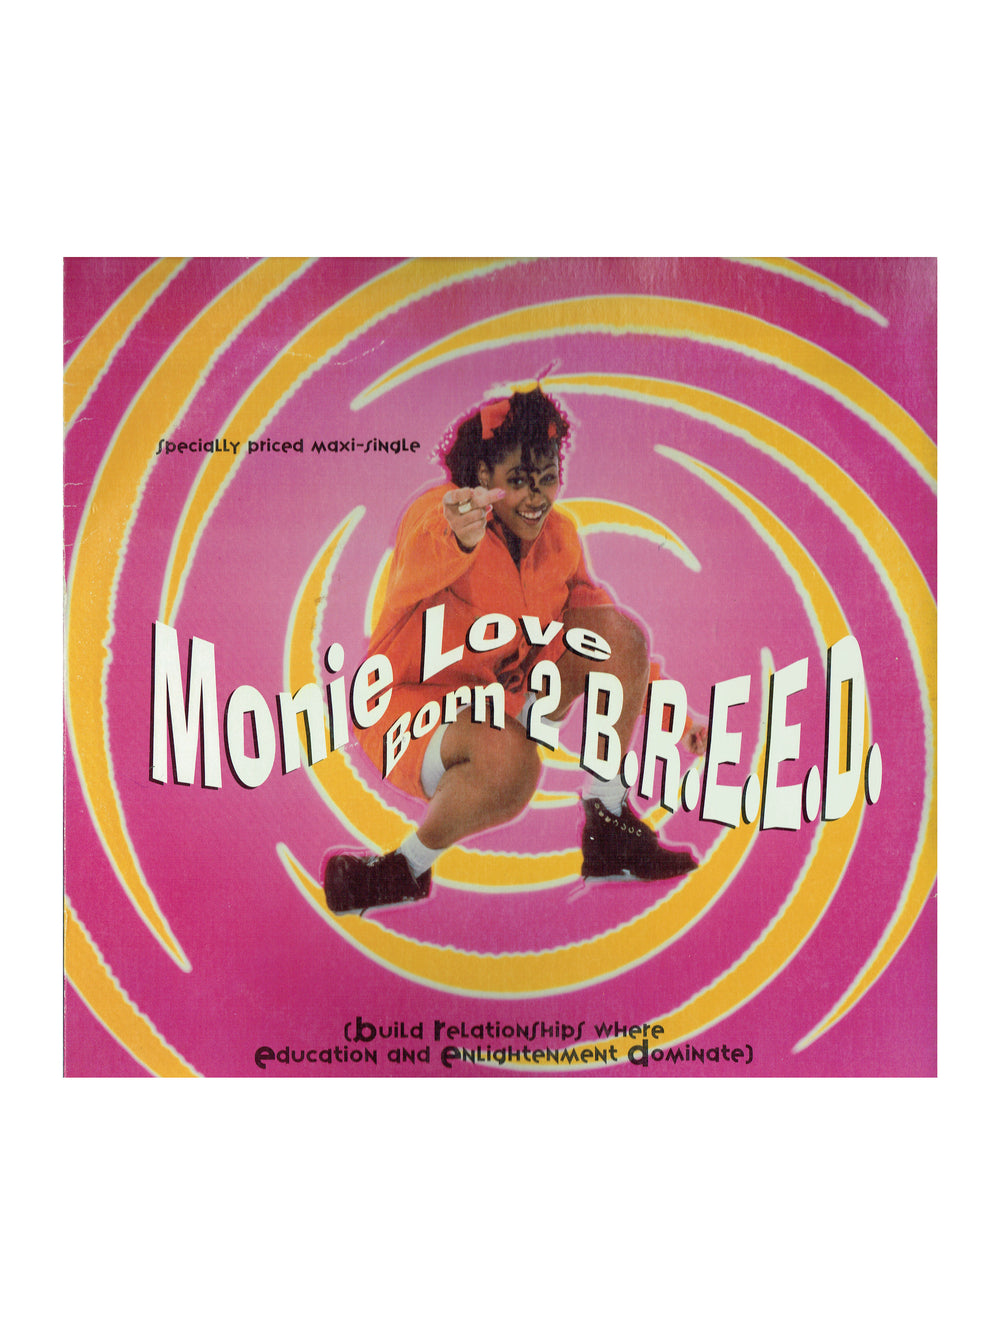 Prince – Monie Love Born 2 B.R.E.E.D Vinyl 12" Maxi Single US Preloved: 1993